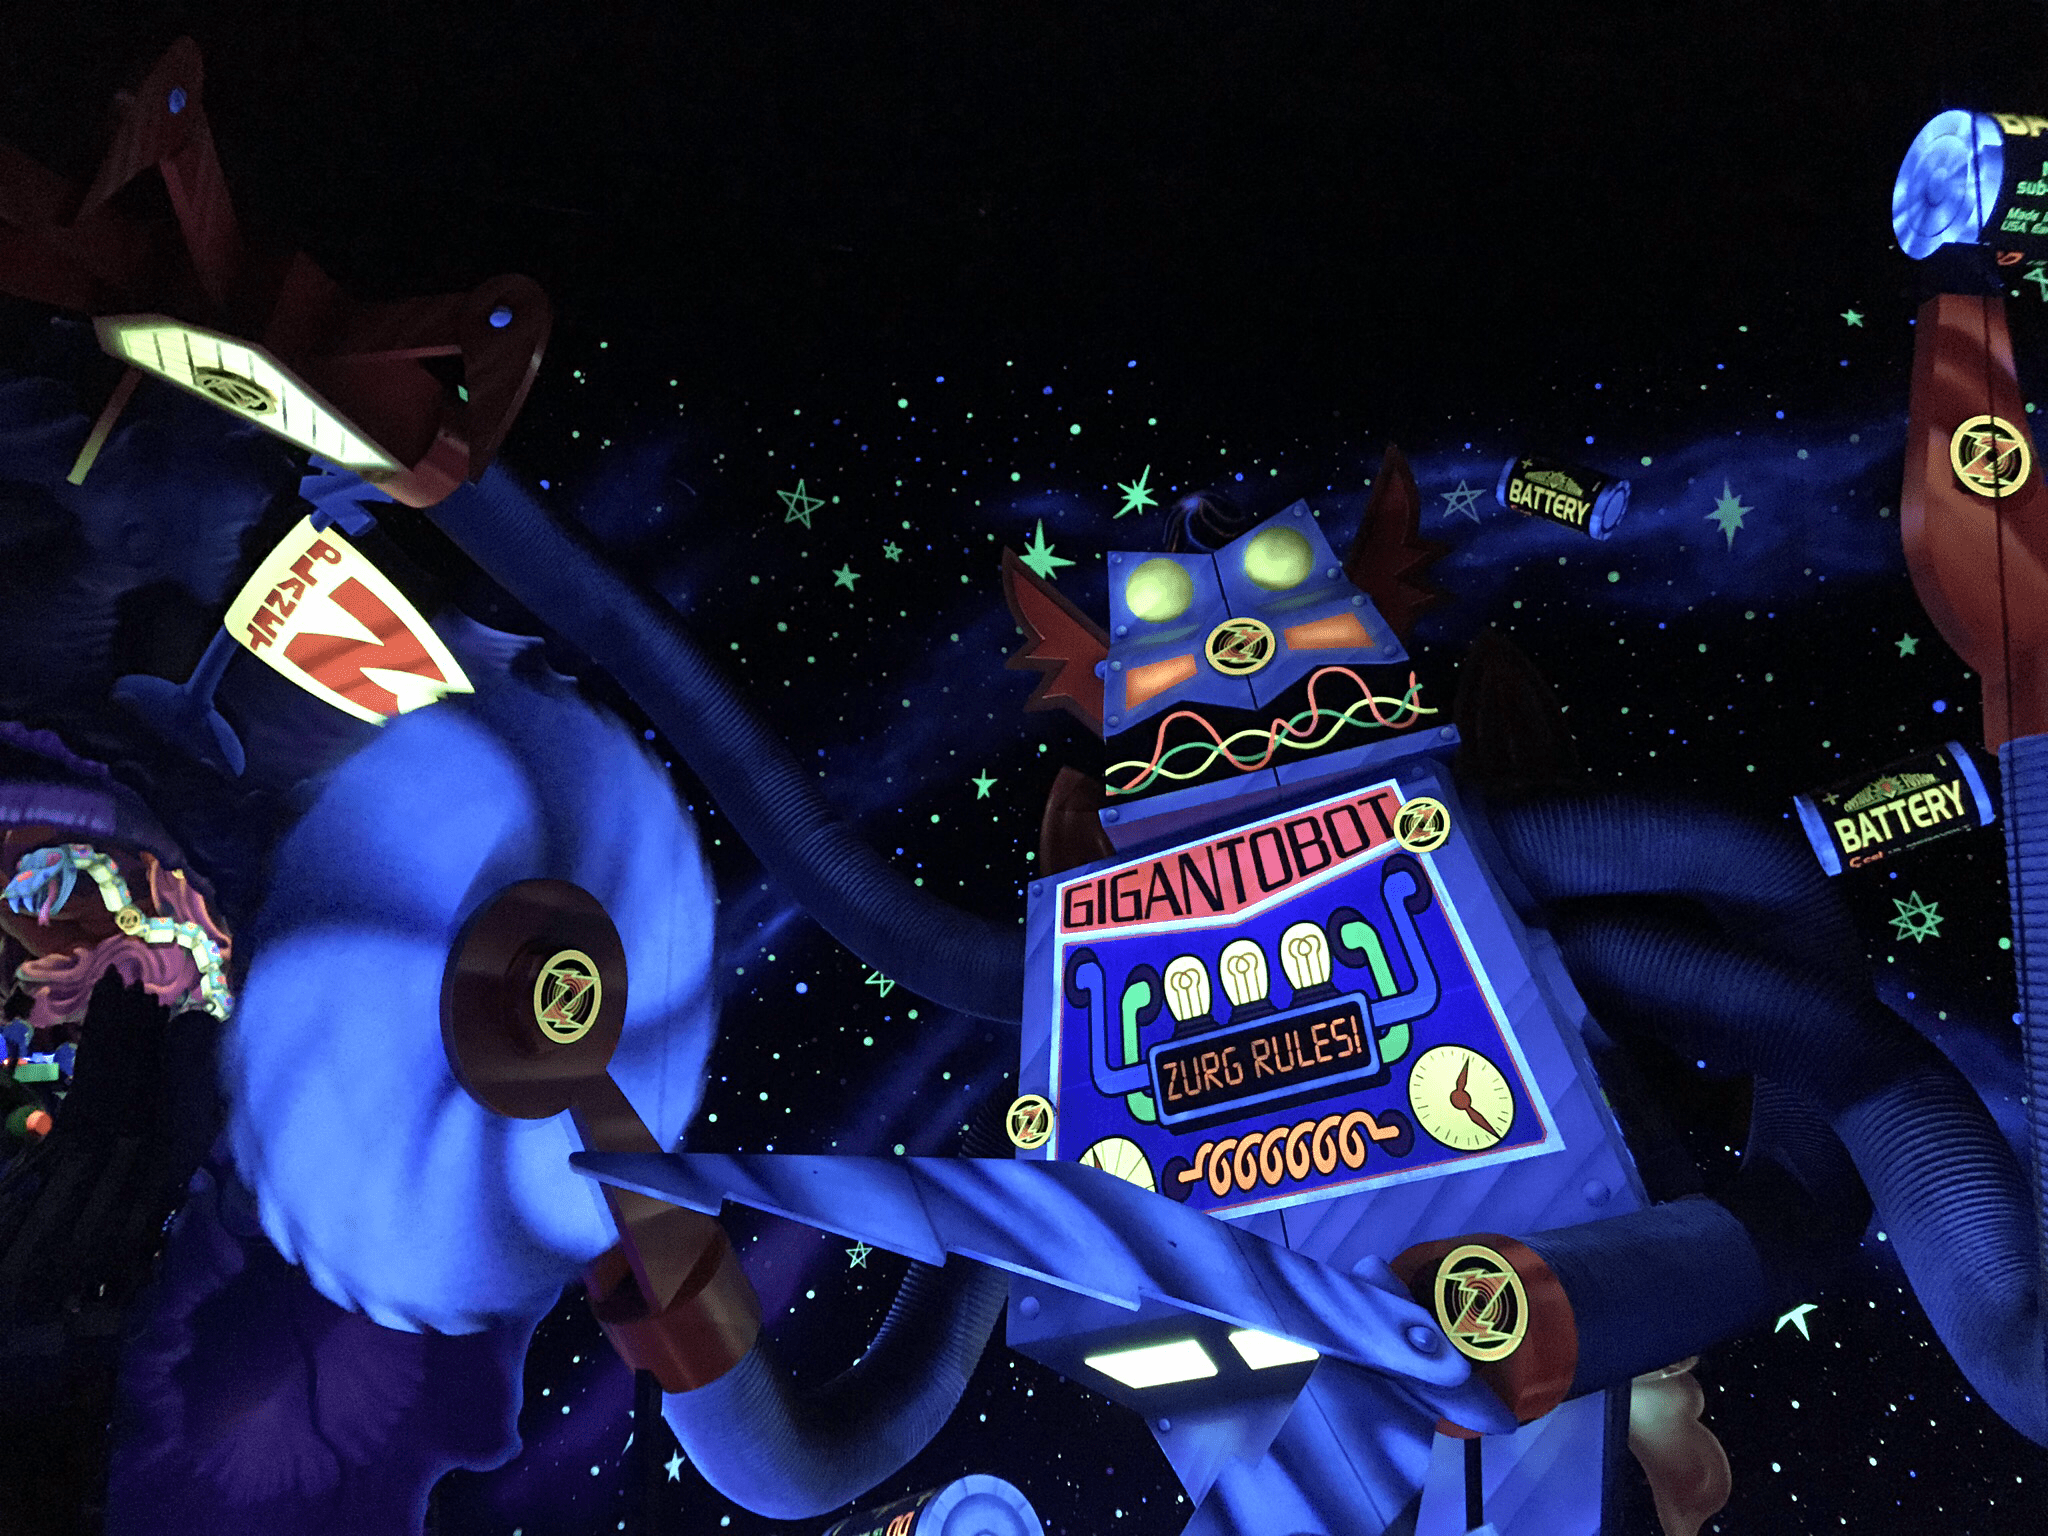 Robots inside Buzz Lightyear Ride